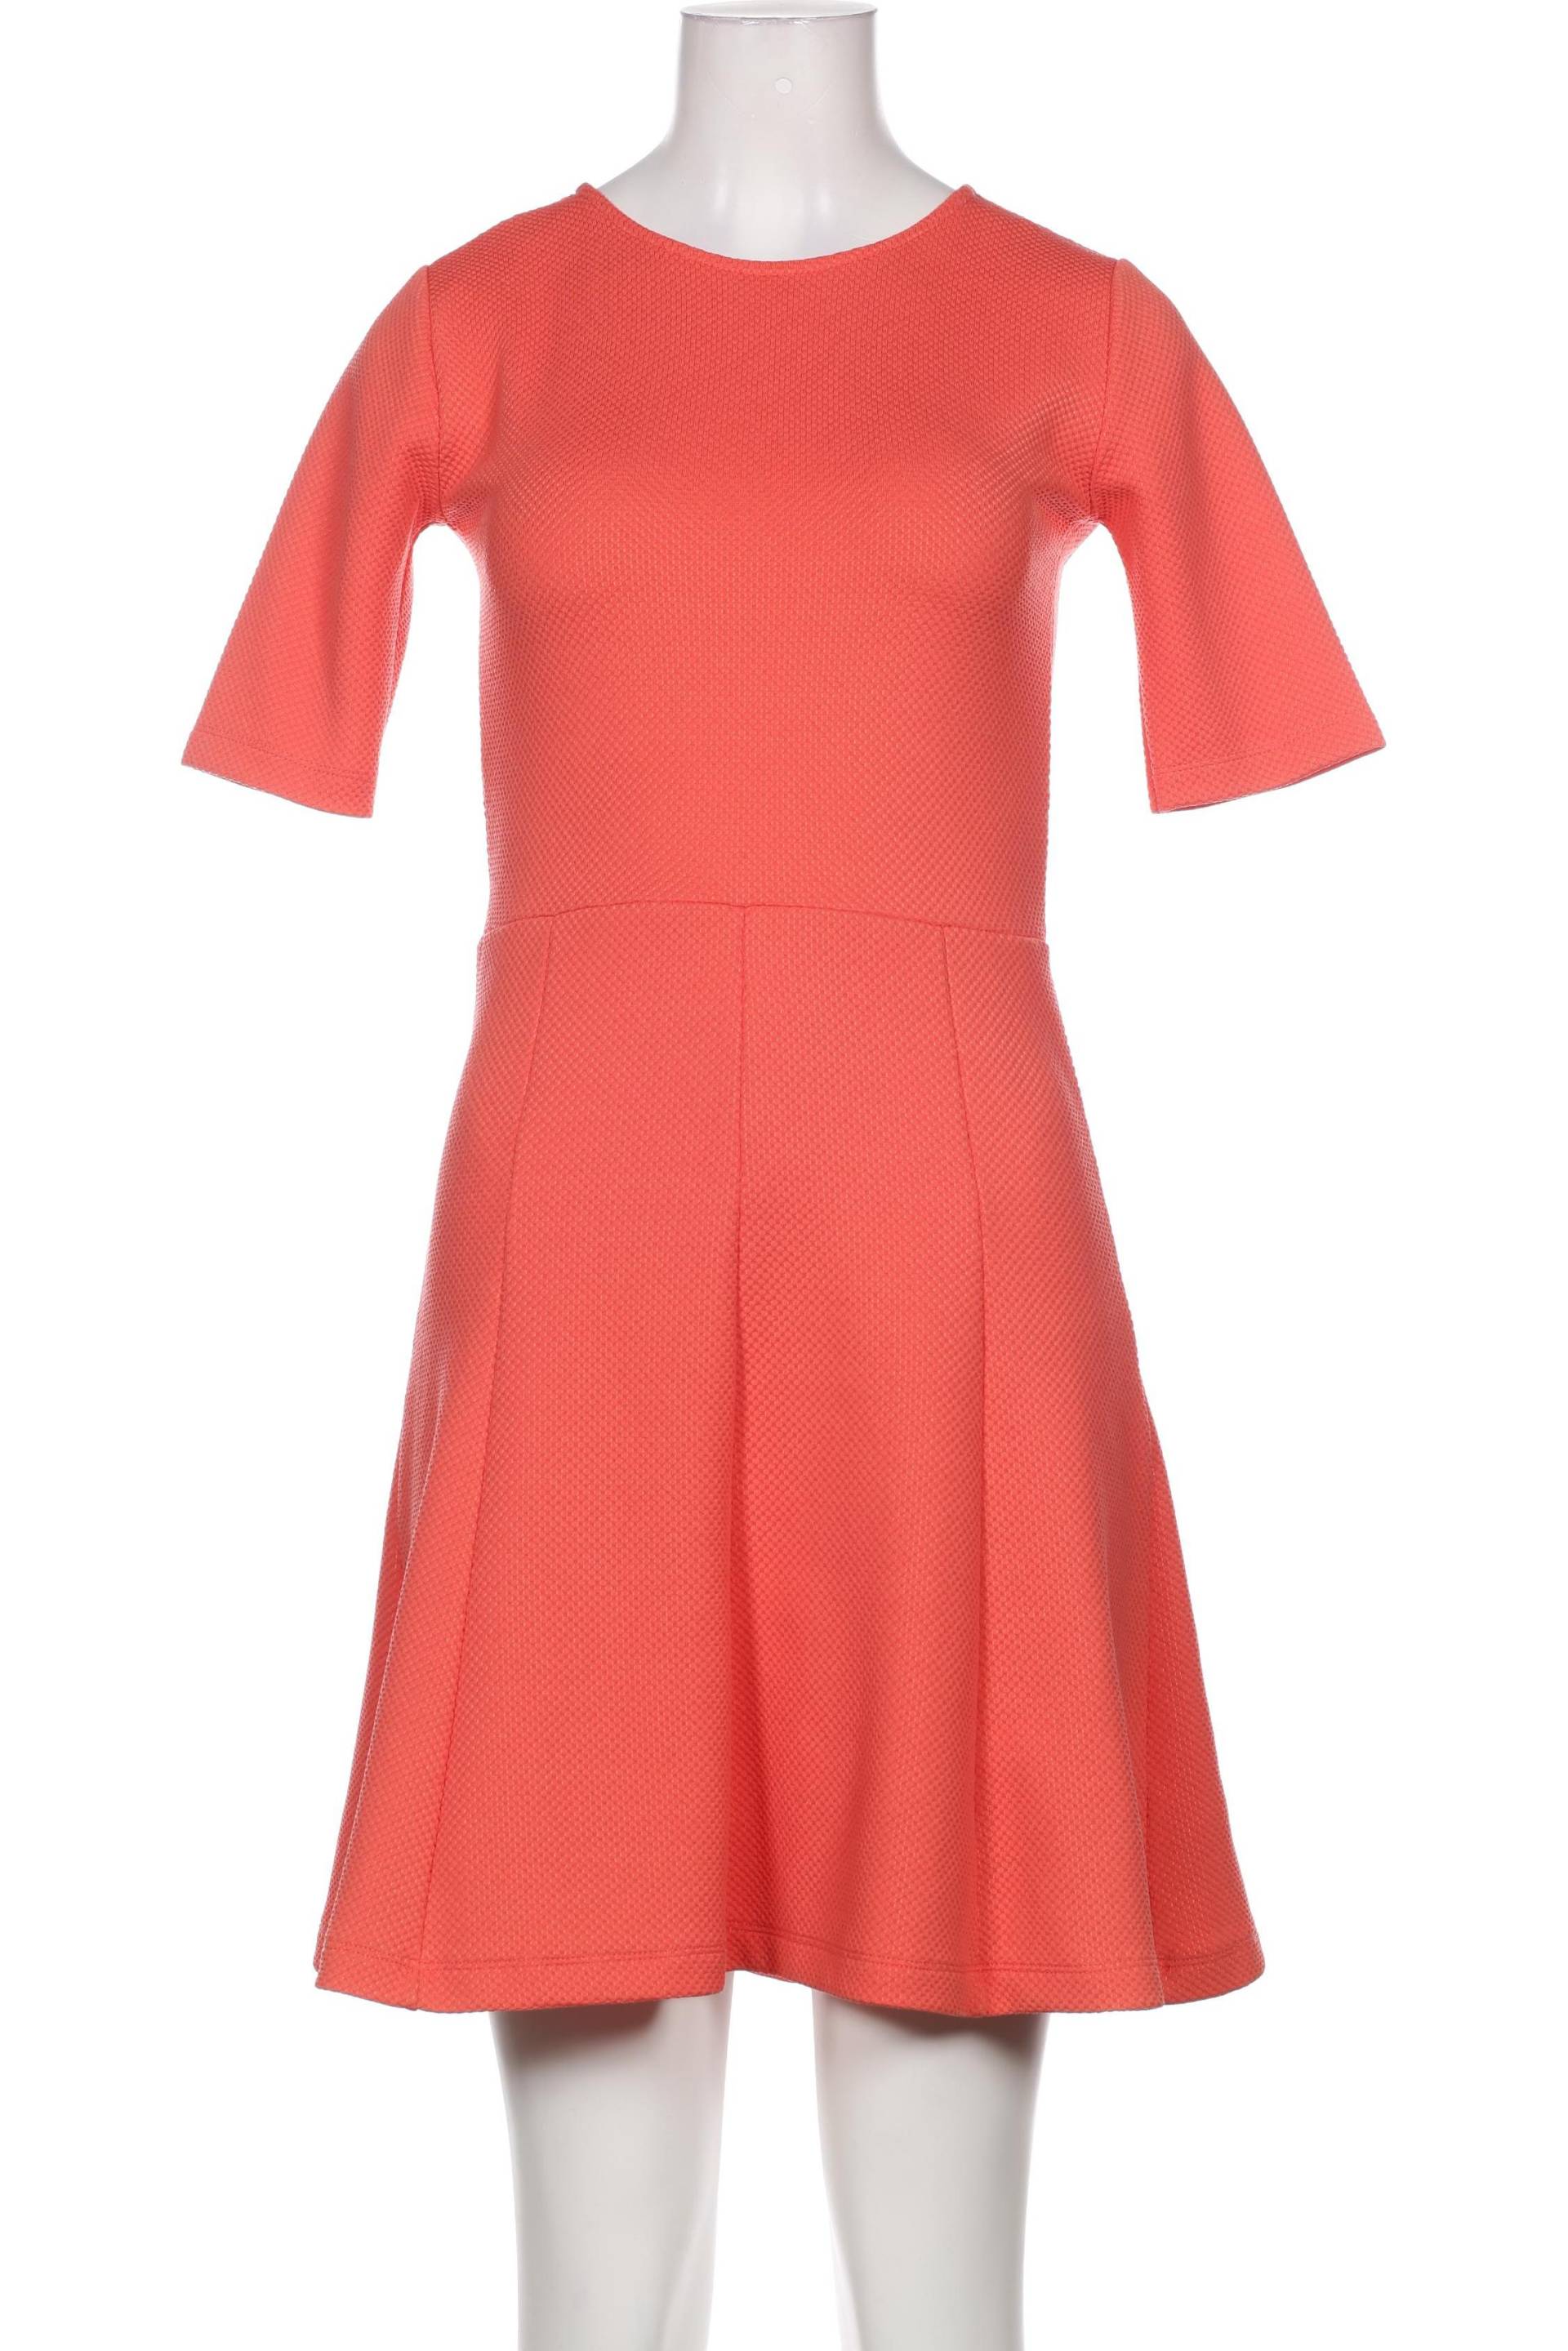 asos Damen Kleid, orange von asos